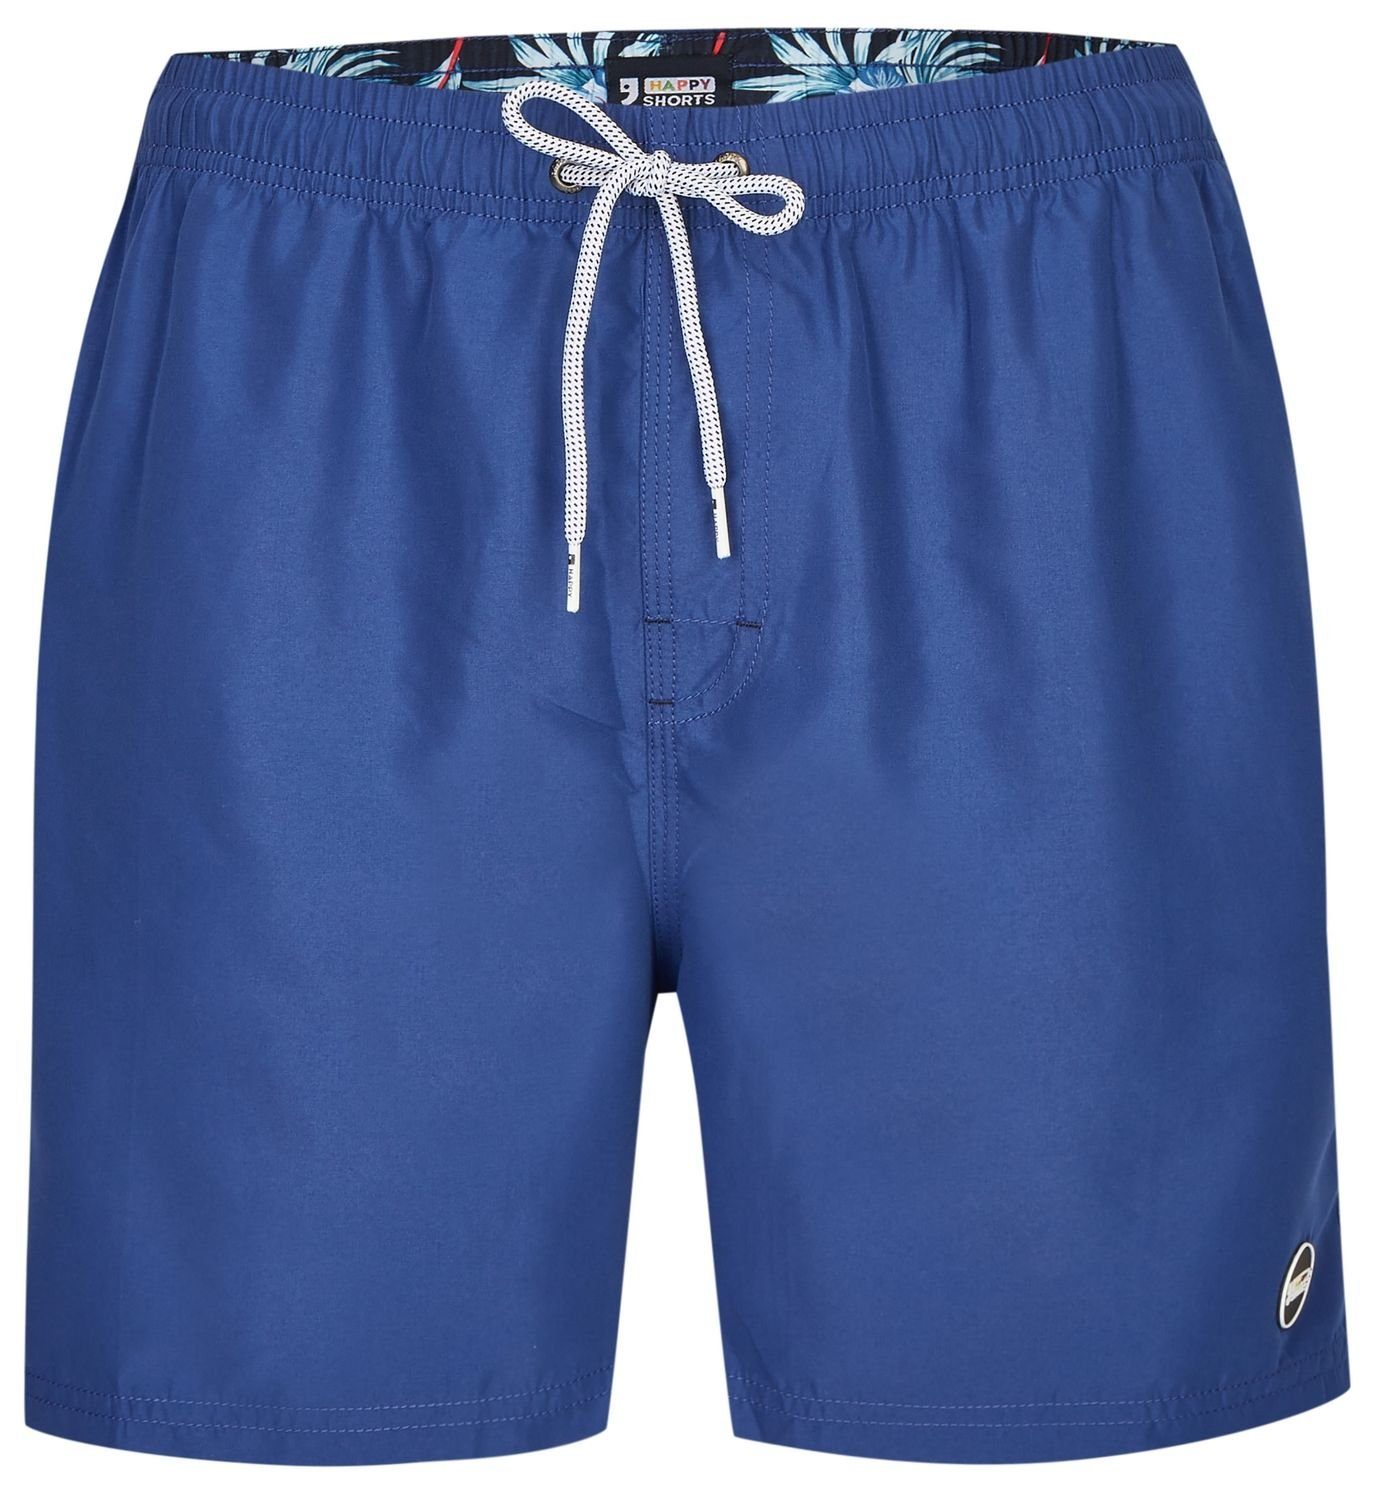 HAPPY SHORTS Badehose HAPPY SHORTS Herren Badeshorts Strandshorts Shorts blau blue S - XXL